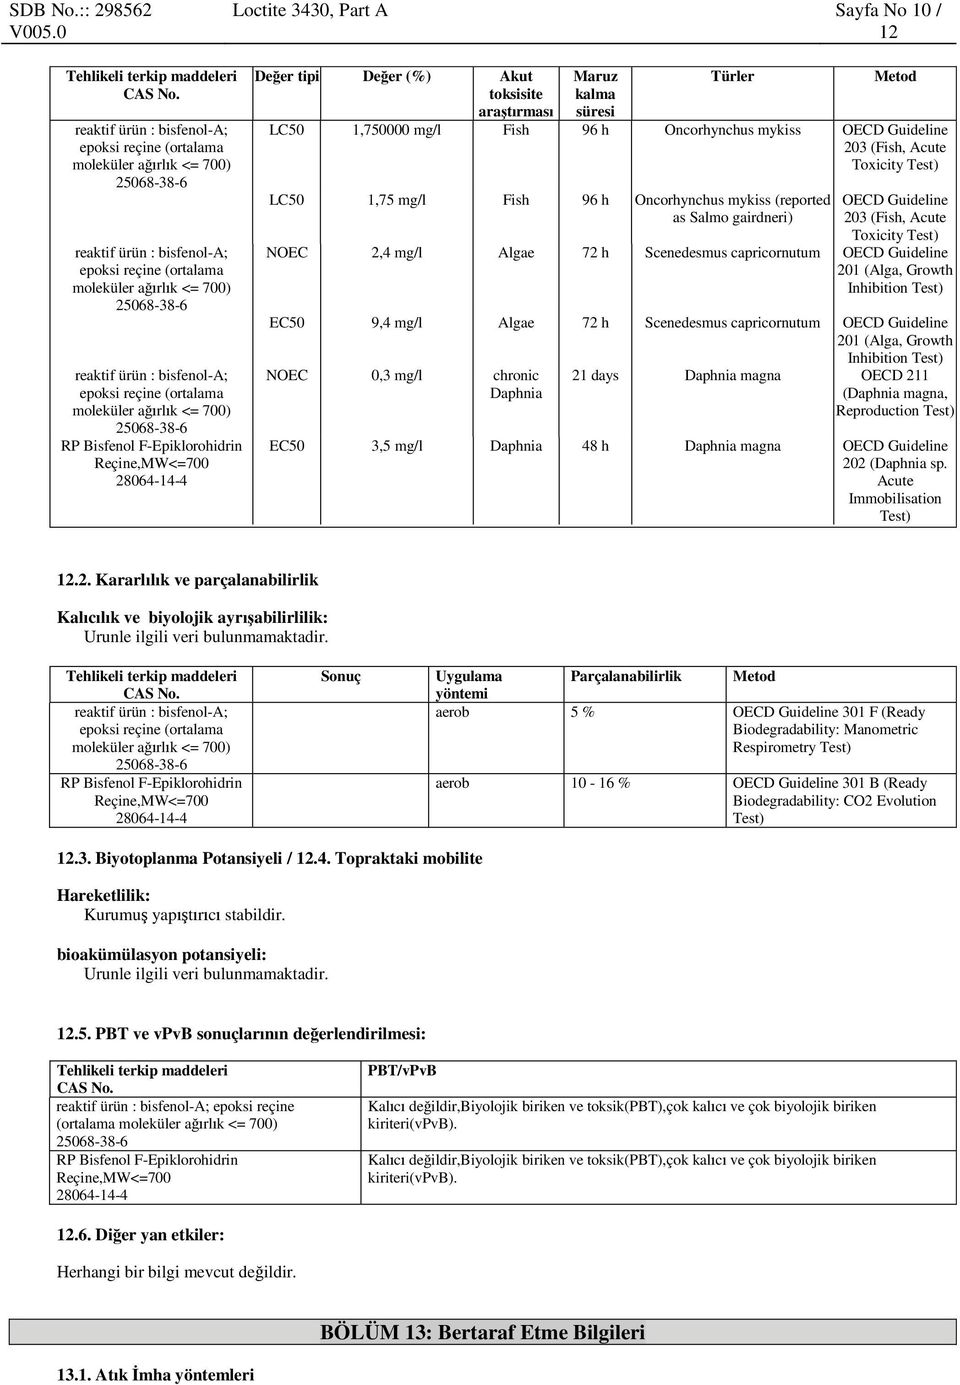 capricornutum OECD Guideline 201 (Alga, Growth Inhibition Test) EC50 9,4 mg/l Algae 72 h Scenedesmus capricornutum OECD Guideline 201 (Alga, Growth Inhibition Test) NOEC 0,3 mg/l chronic Daphnia 21